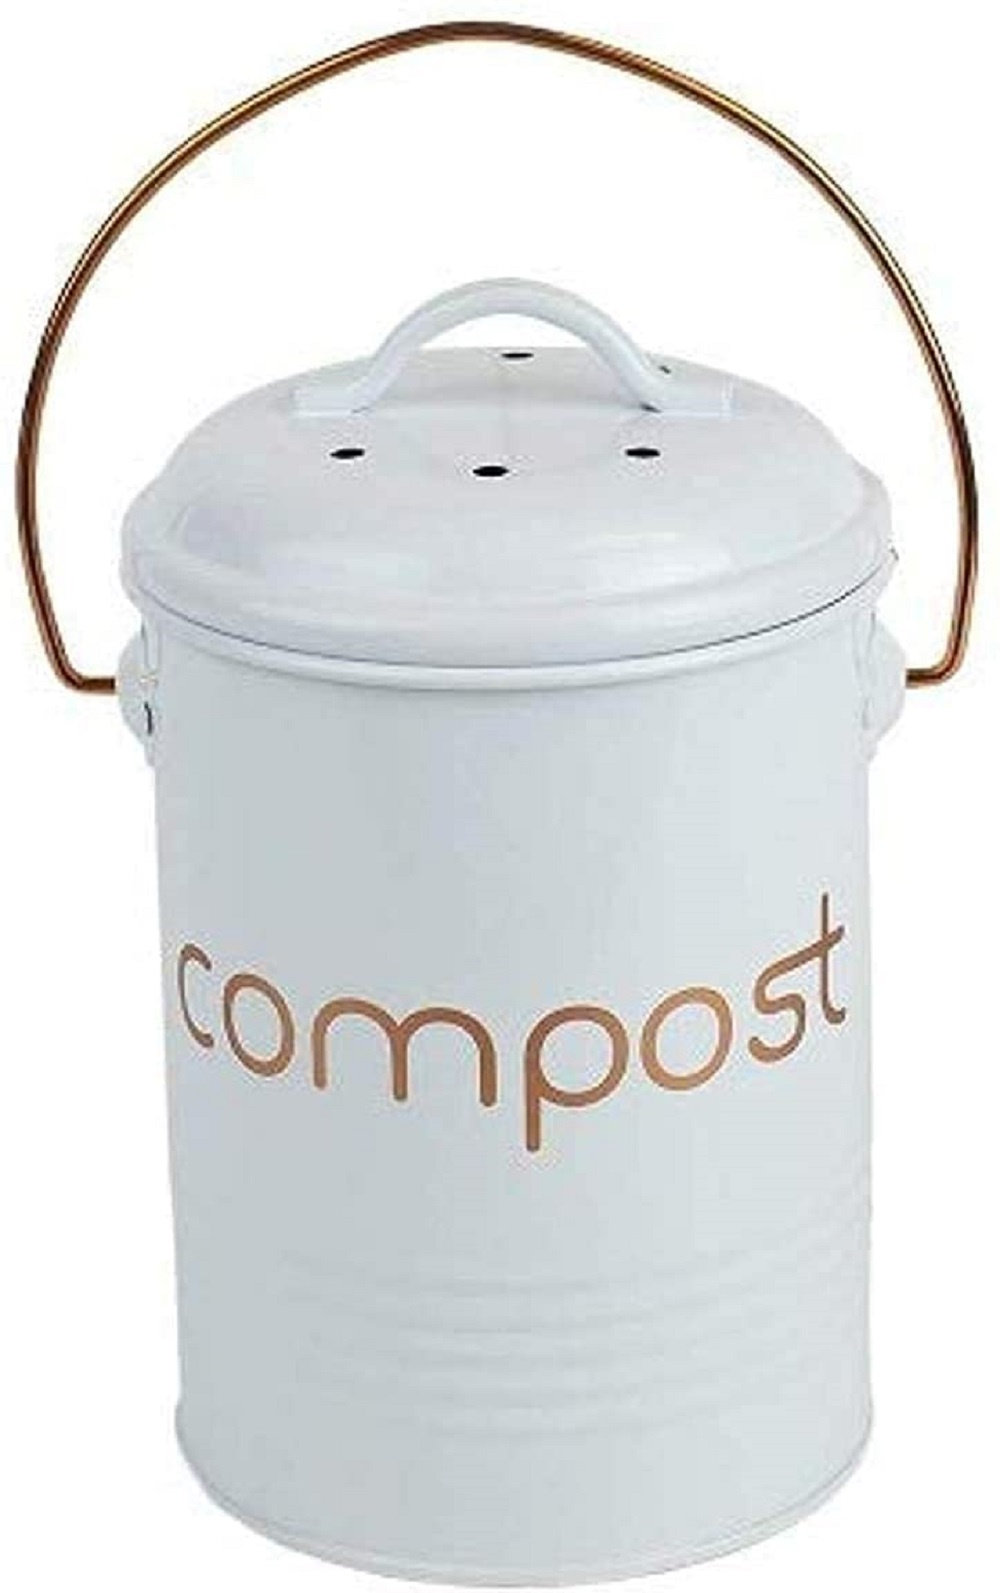 Food Waste Plastic Compost Caddy Worktop Kitchen Vegetable Holder 2.5 Litre New 